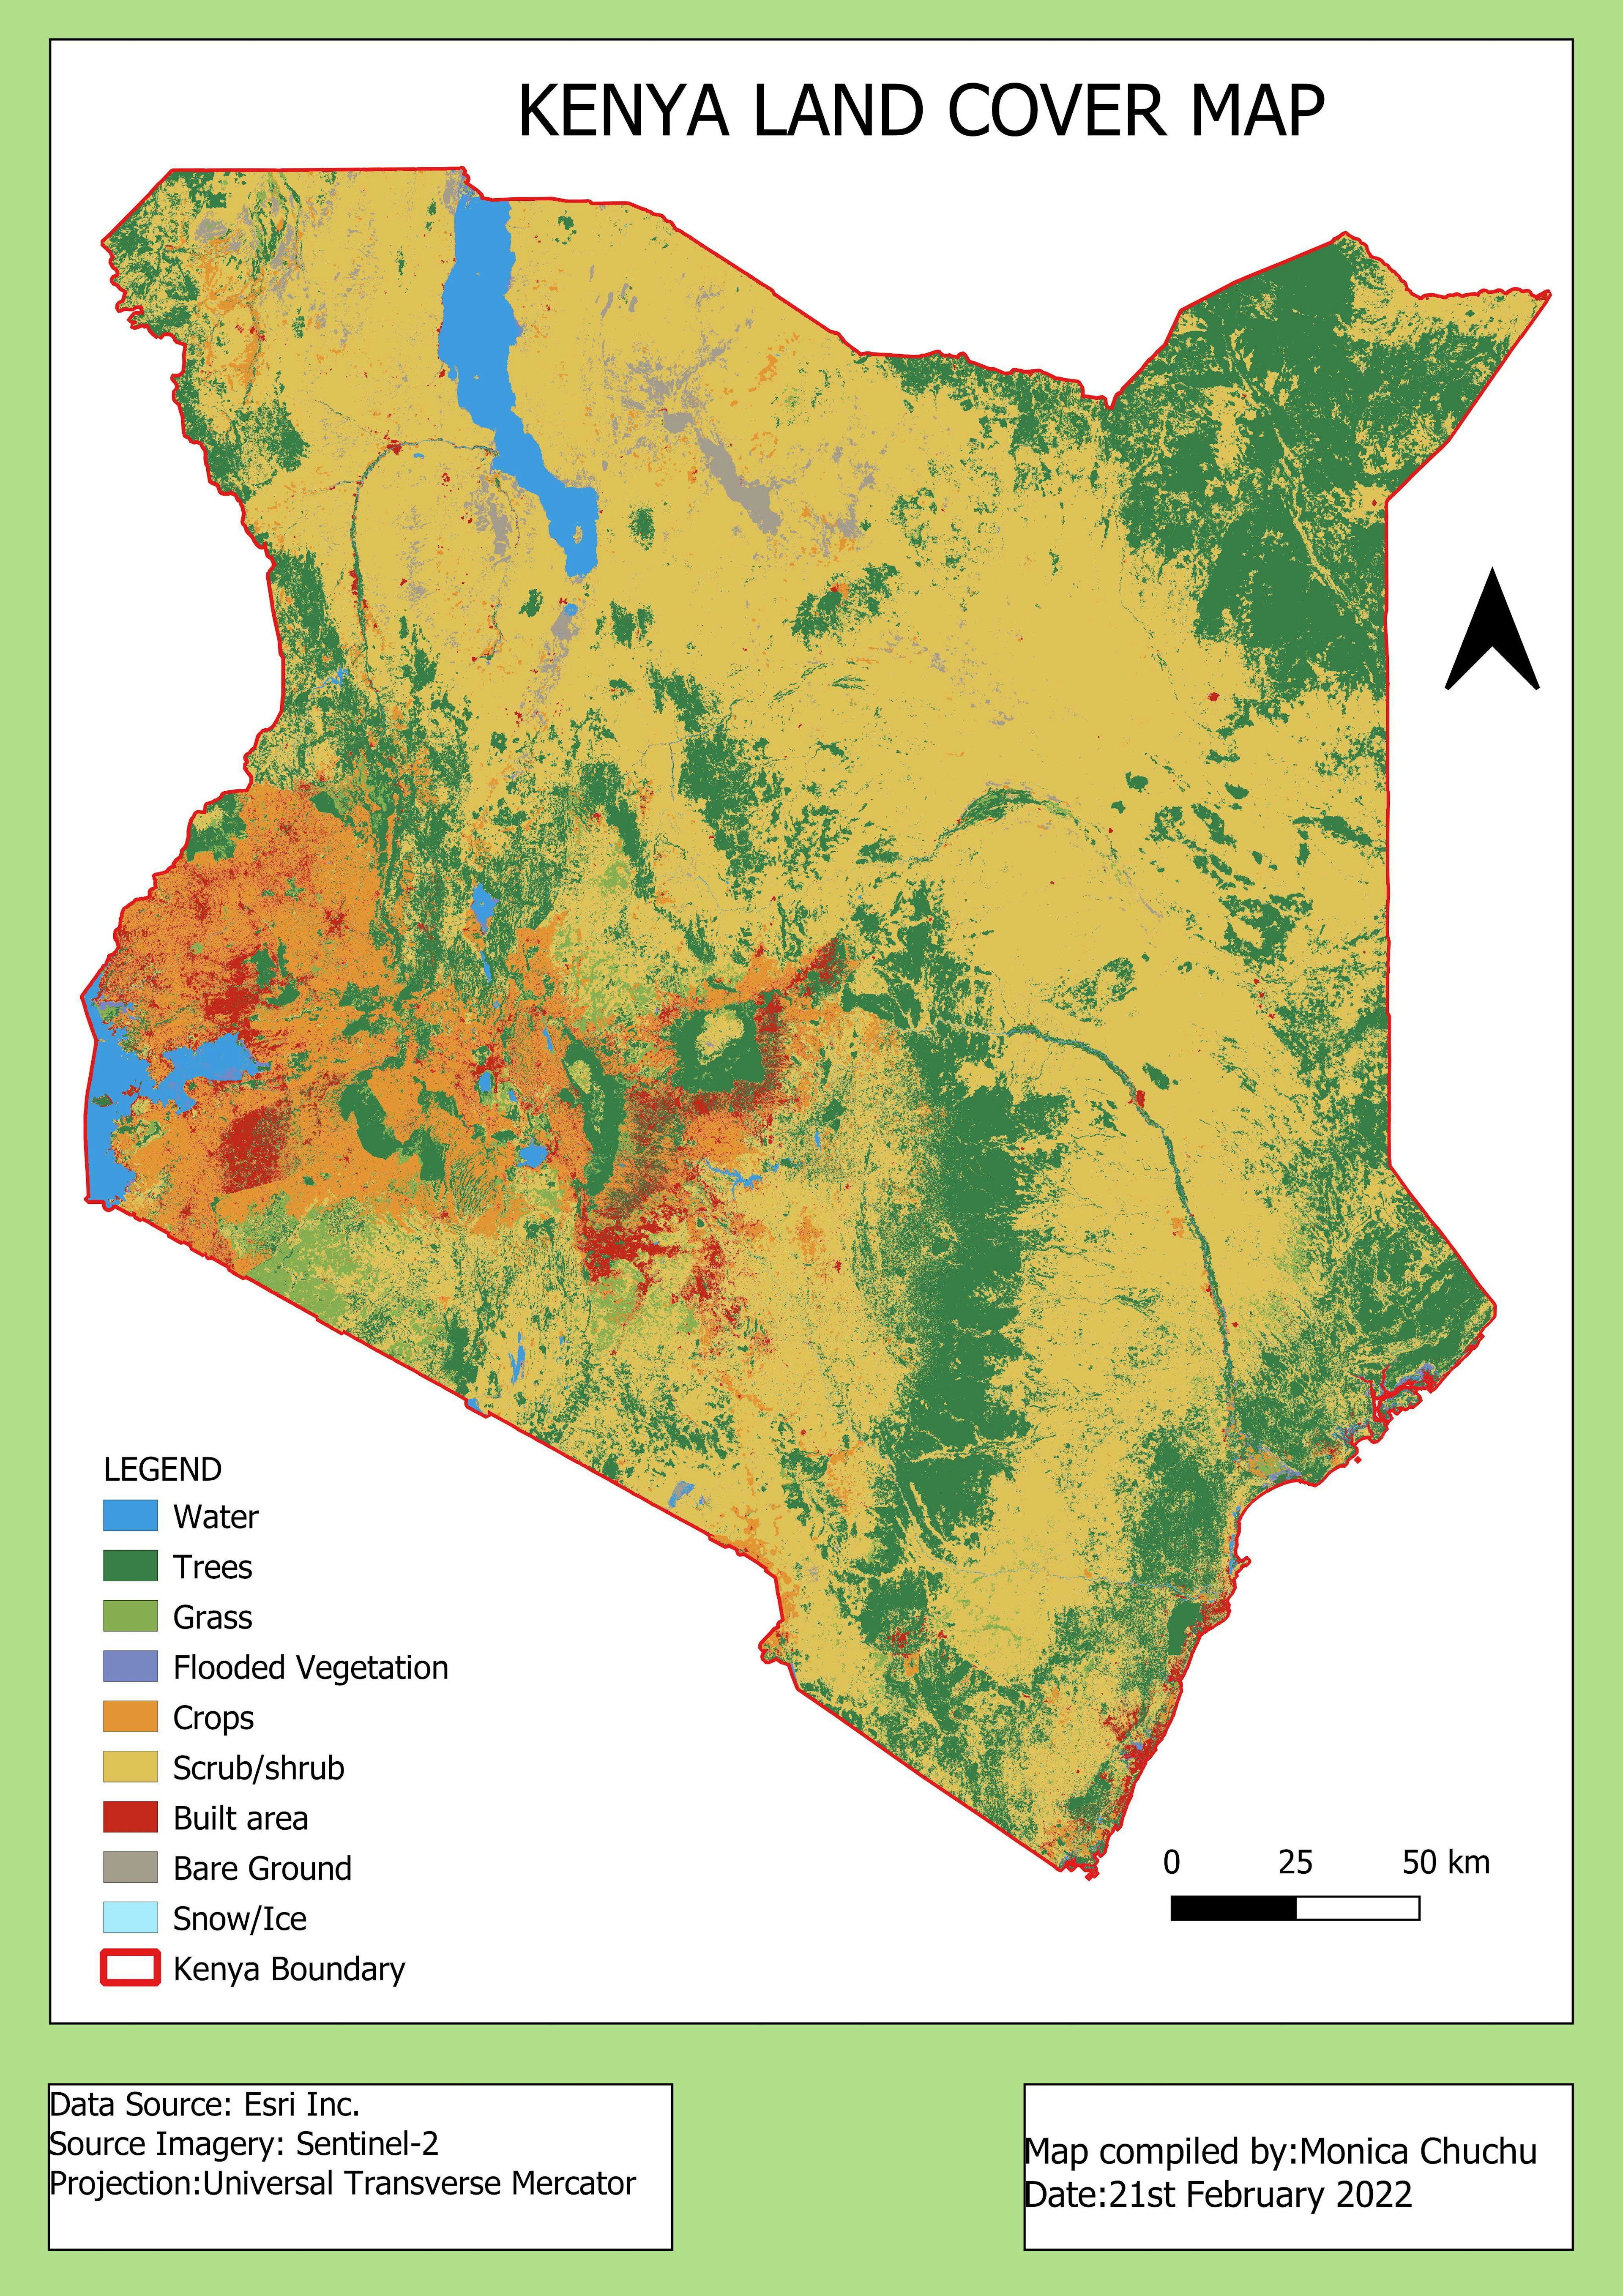 LAND COVER MAP FOR KENYA